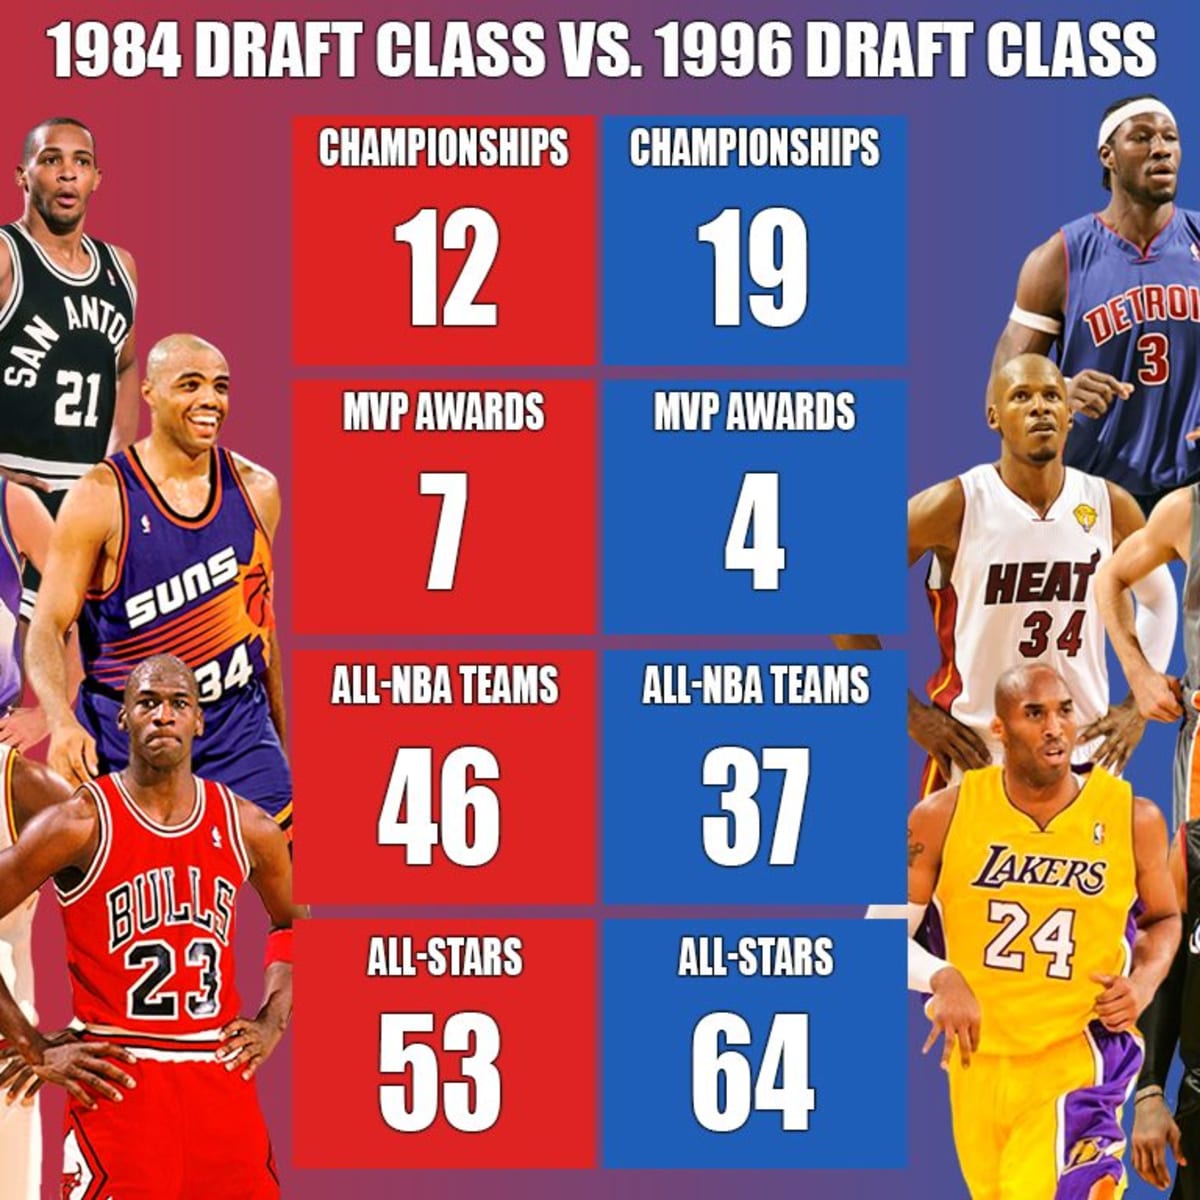 The Full Comparison: 1984 Draft Class vs. 1996 Draft Class